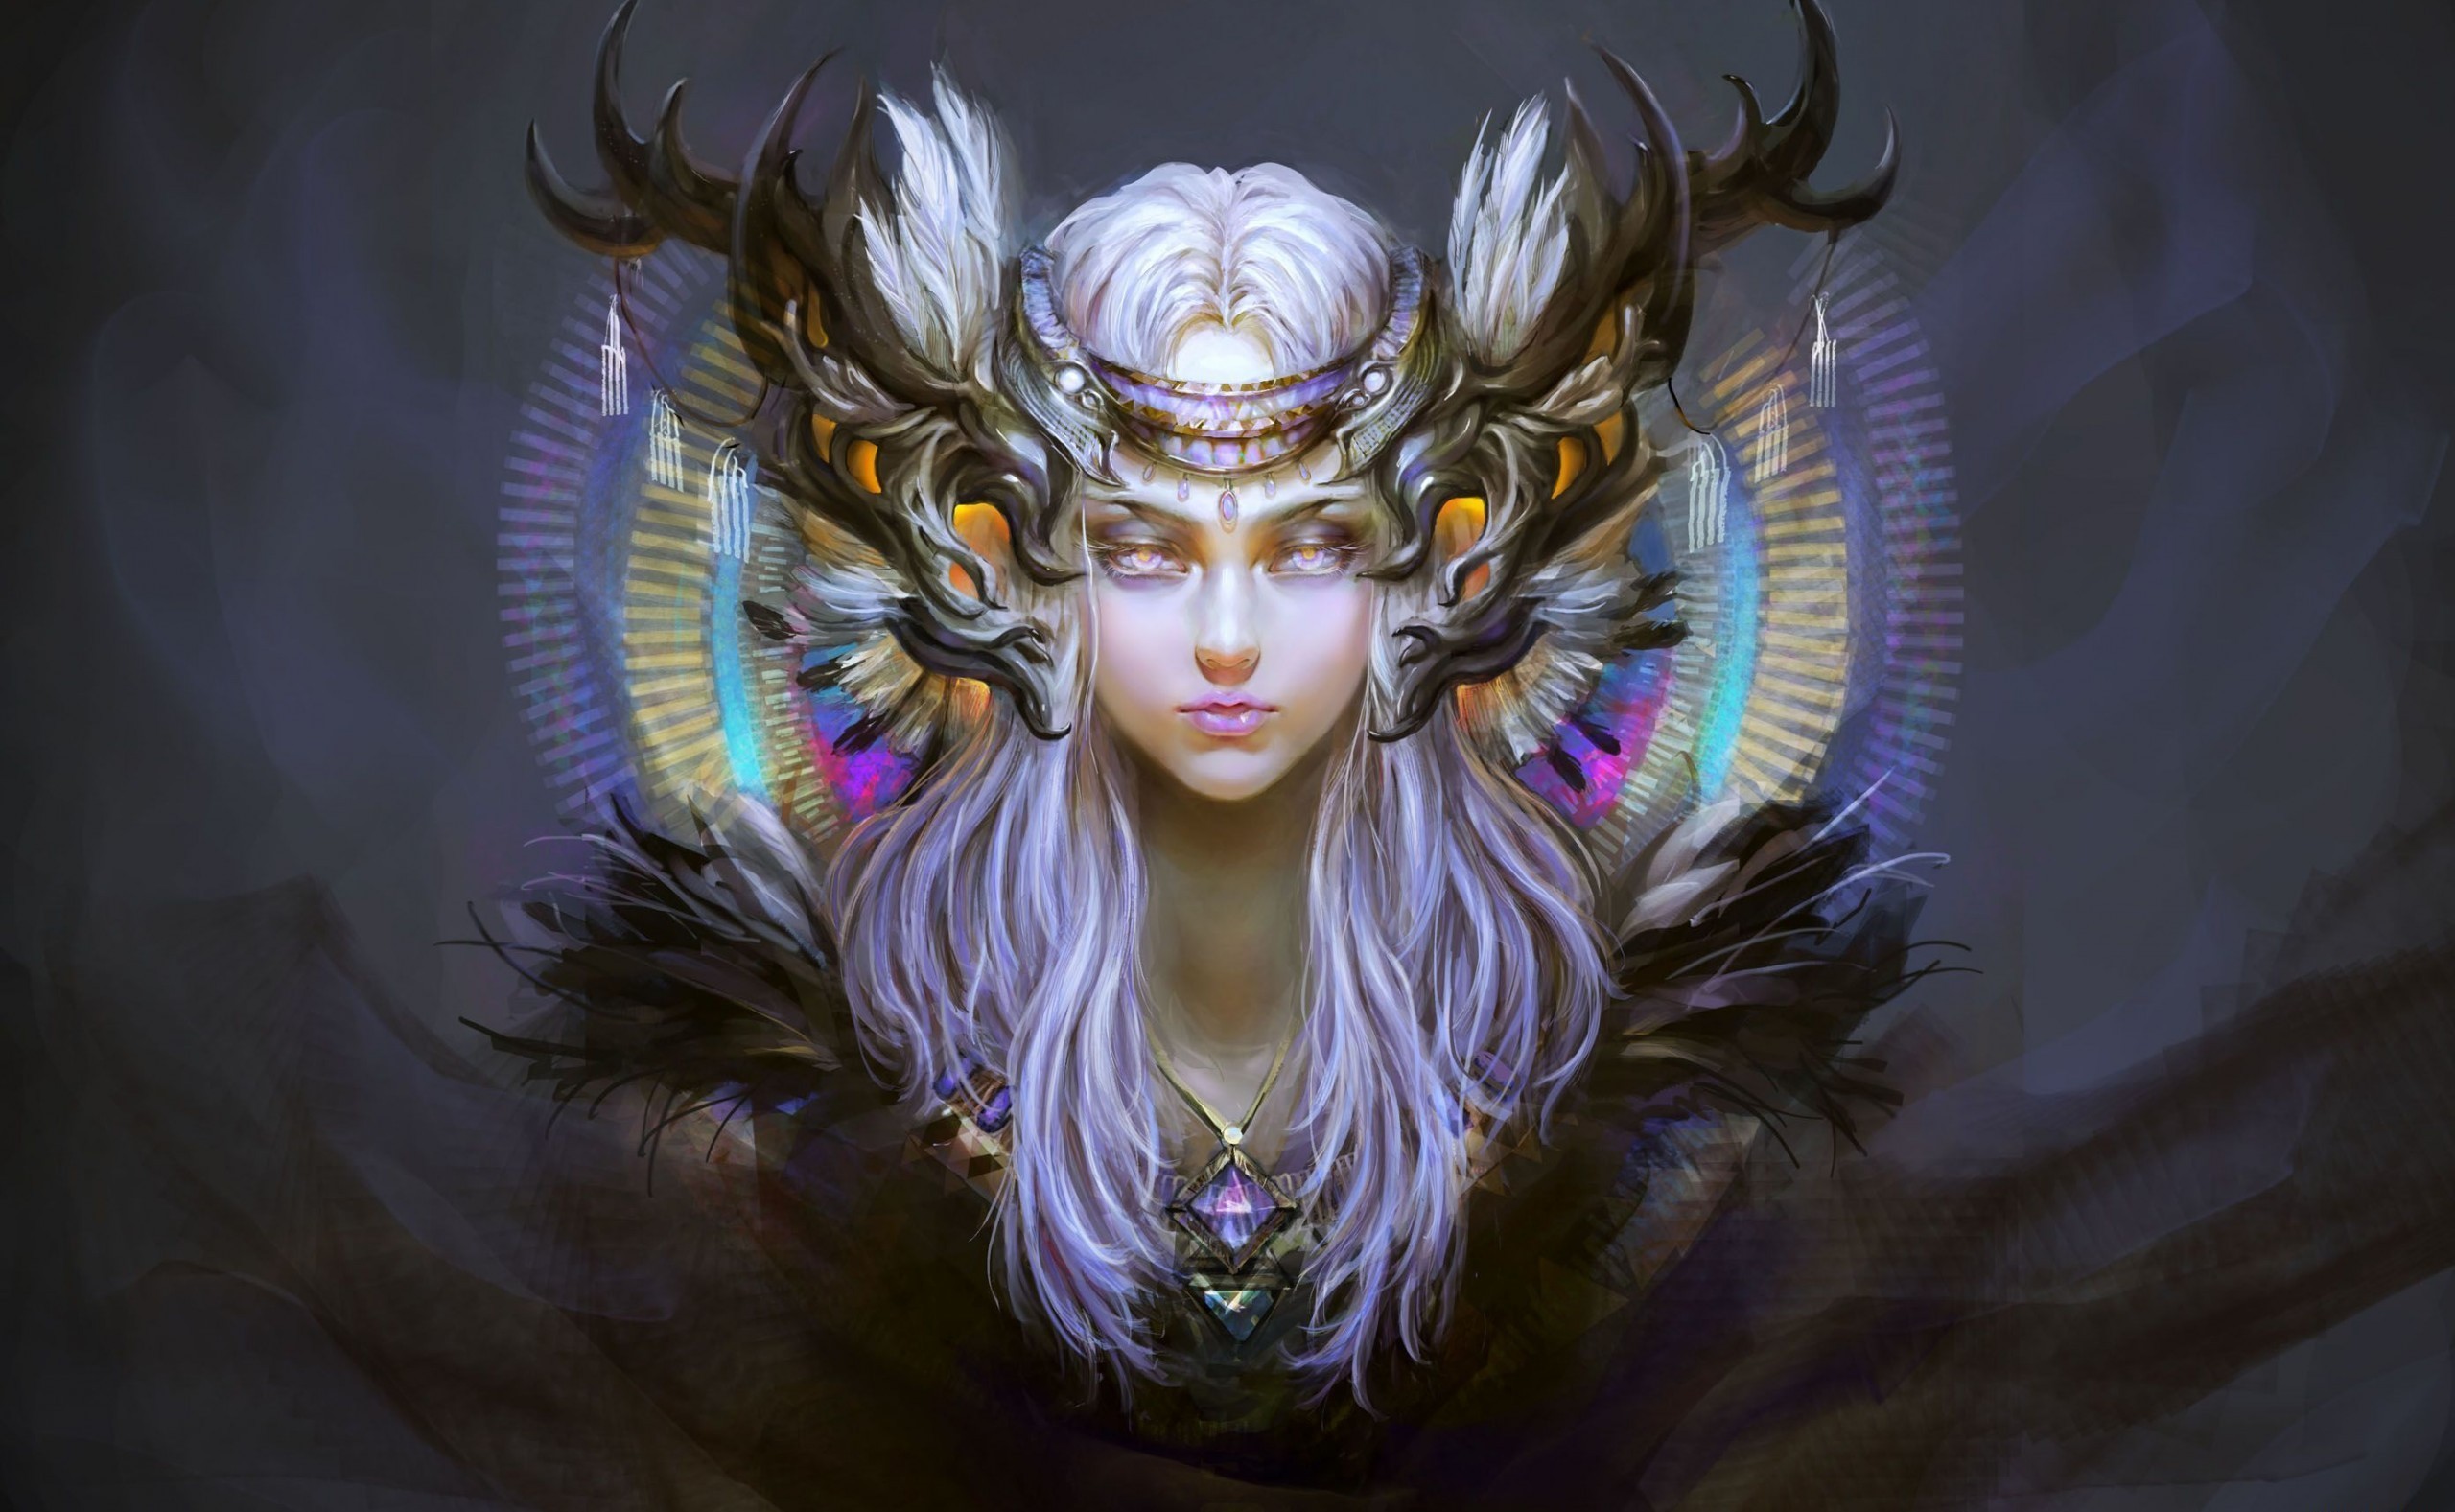 General 2560x1577 artwork fantasy art fantasy girl long hair women face pink lipstick purple hair